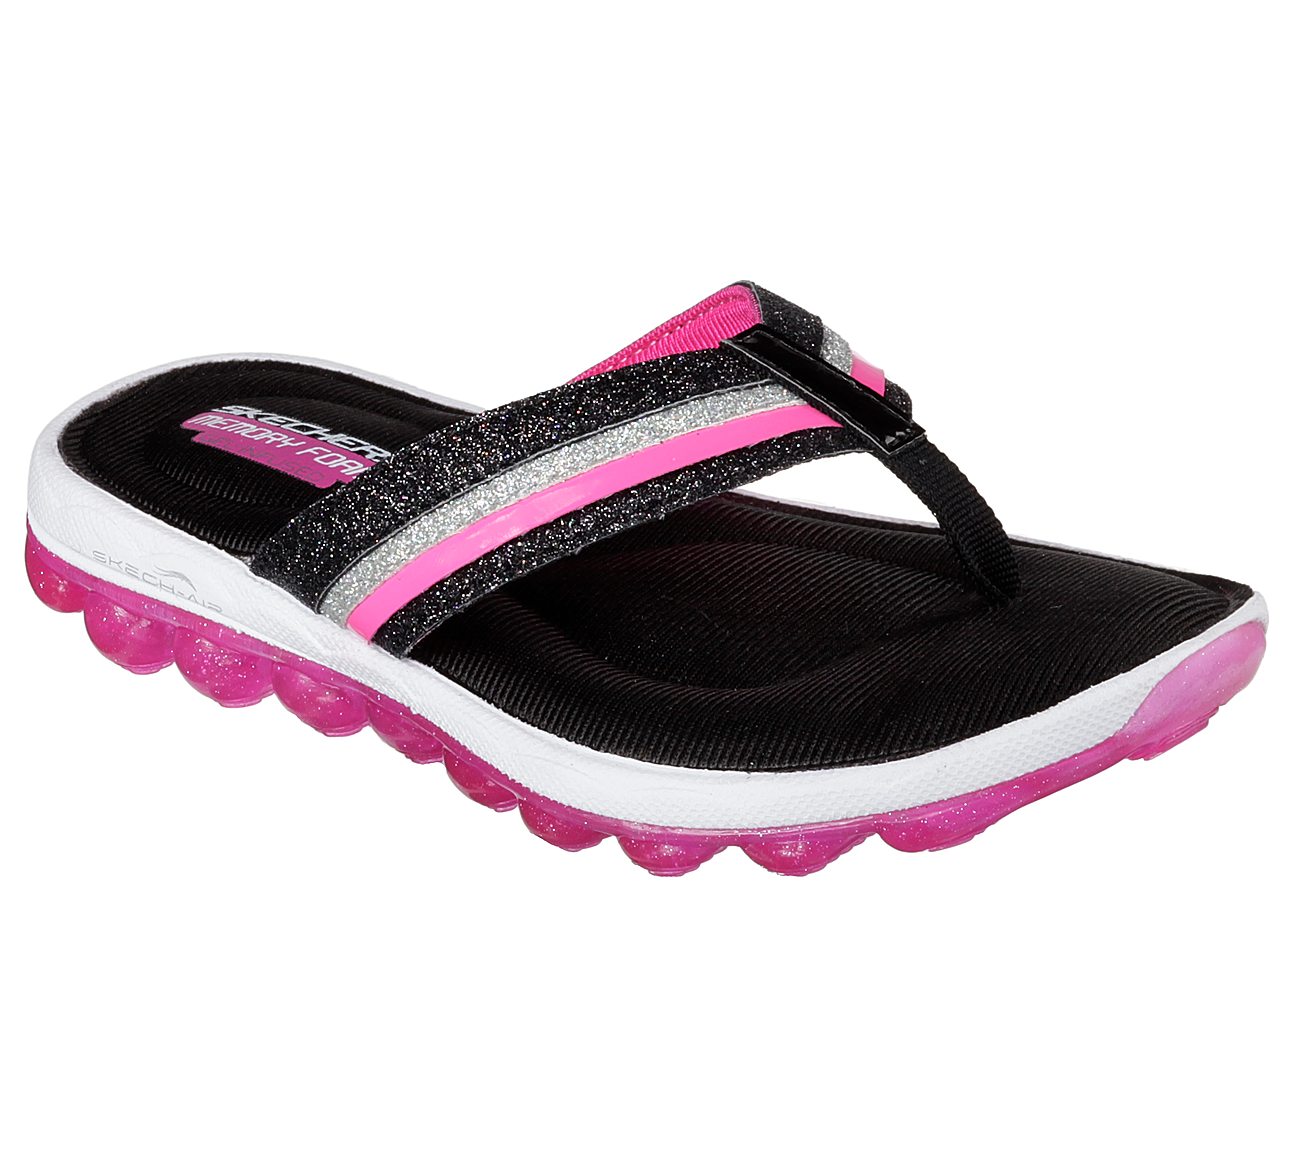 Buy SKECHERS Skech-Air - Summer Shine Comfort Sandals Shoes